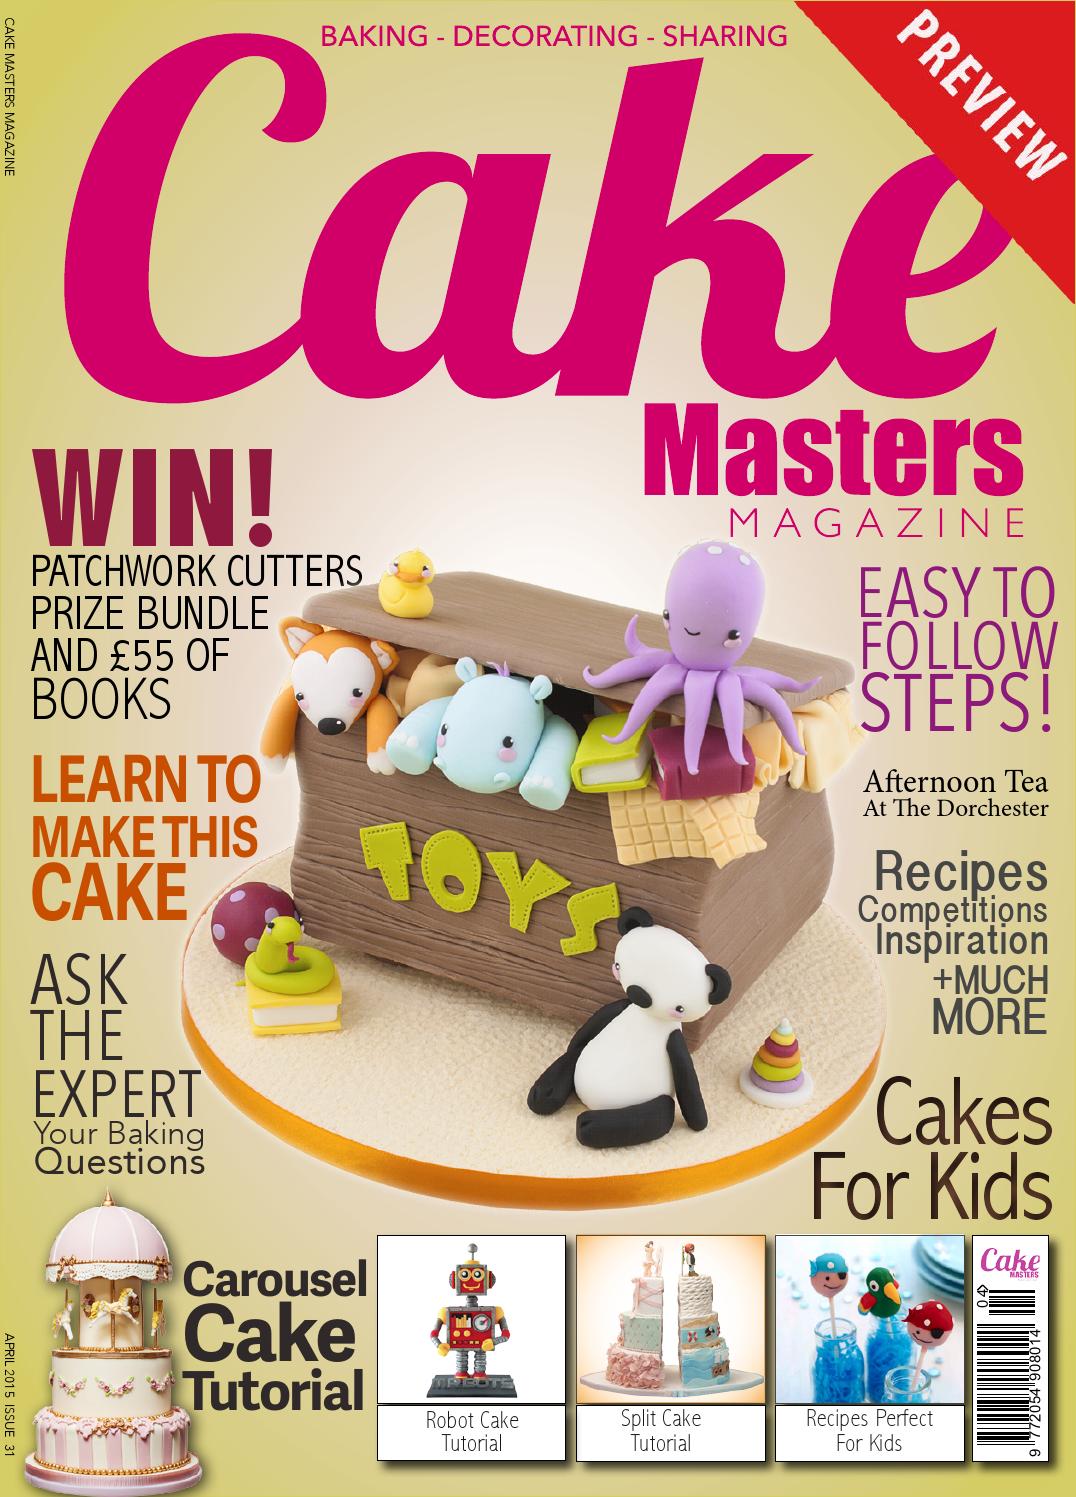 darko pejkovic recommends The Cake Magazine Girls